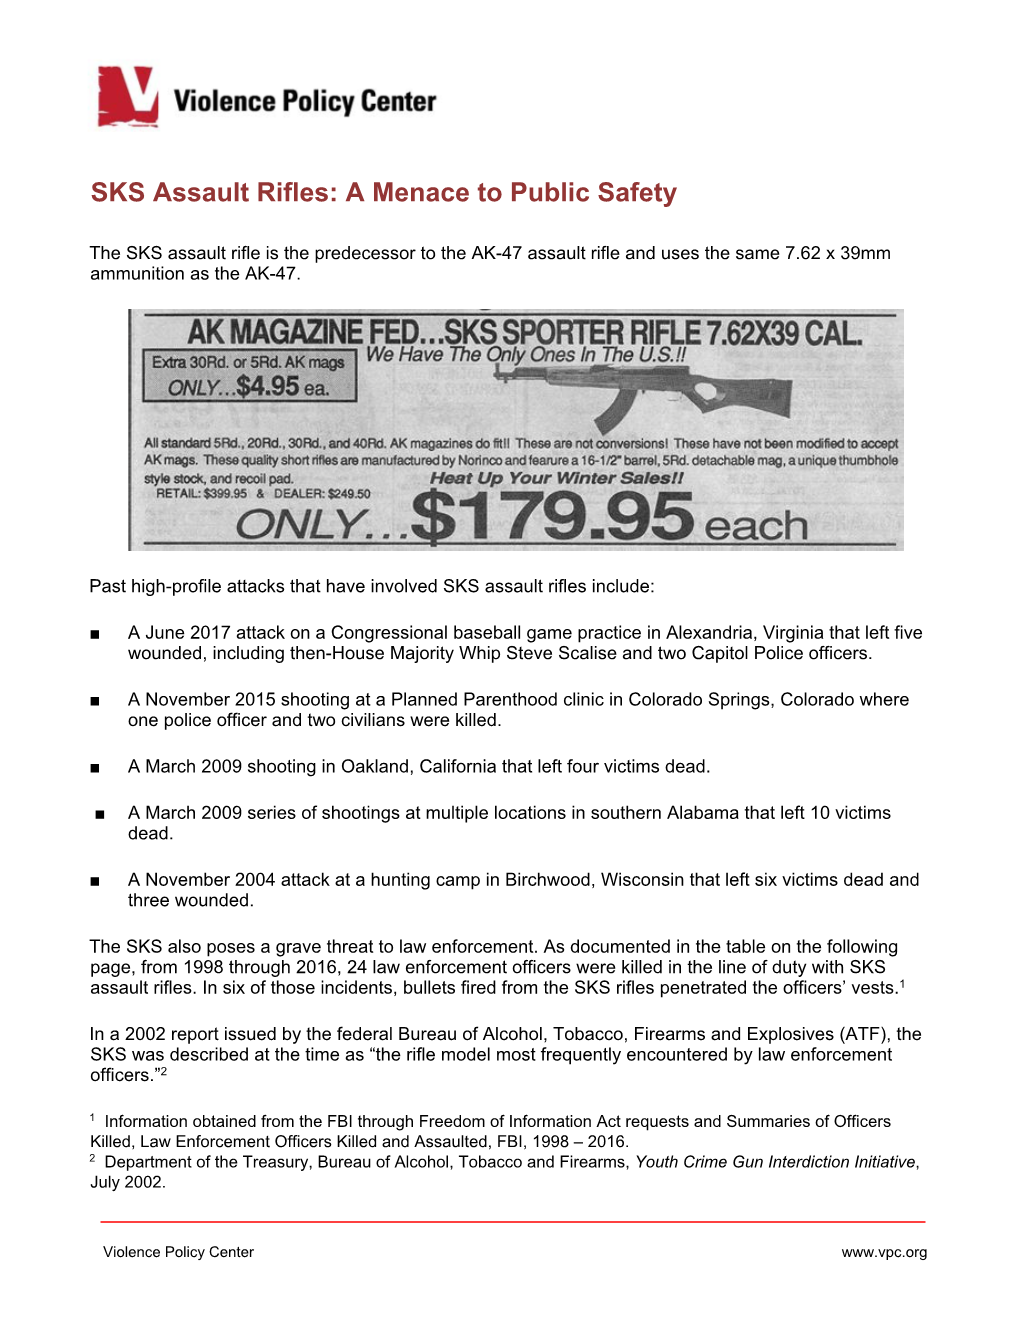 SKS Assault Rifles: a Menace to Public Safety